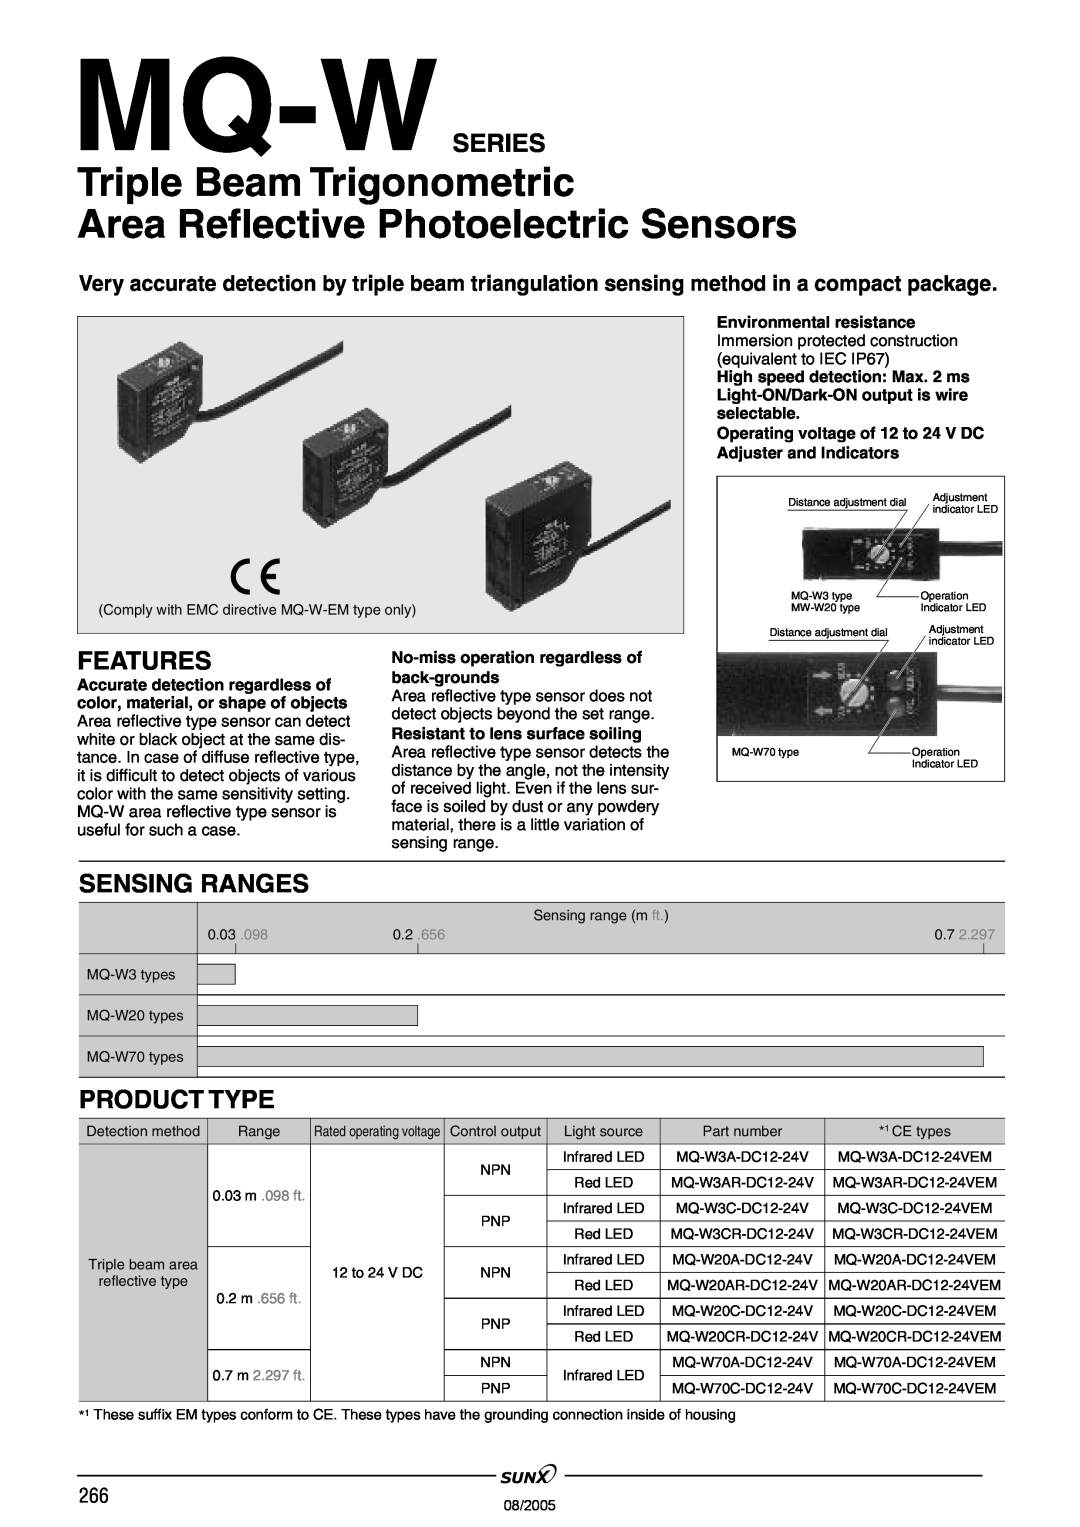 Panasonic MQ-W3, MW-W20 manual Mq-Wseries, Features, Sensing Ranges, Product Type, Triple Beam Trigonometric 